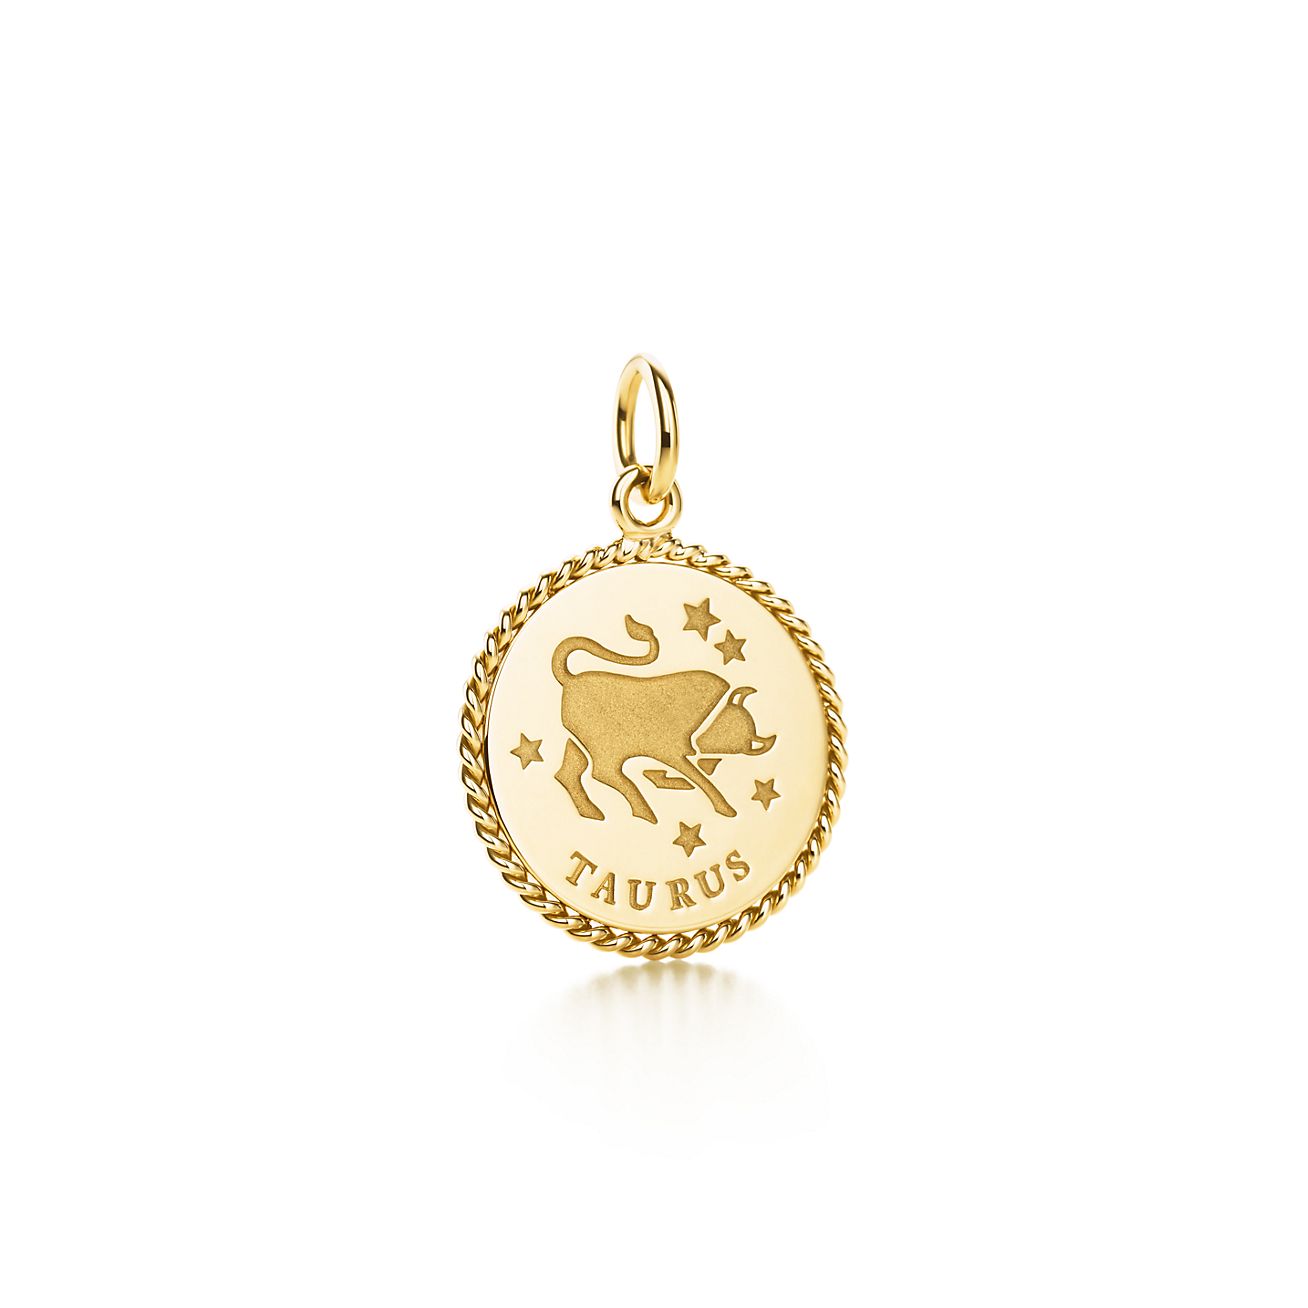 Taurus charm in 18k gold. | Tiffany \u0026 Co.